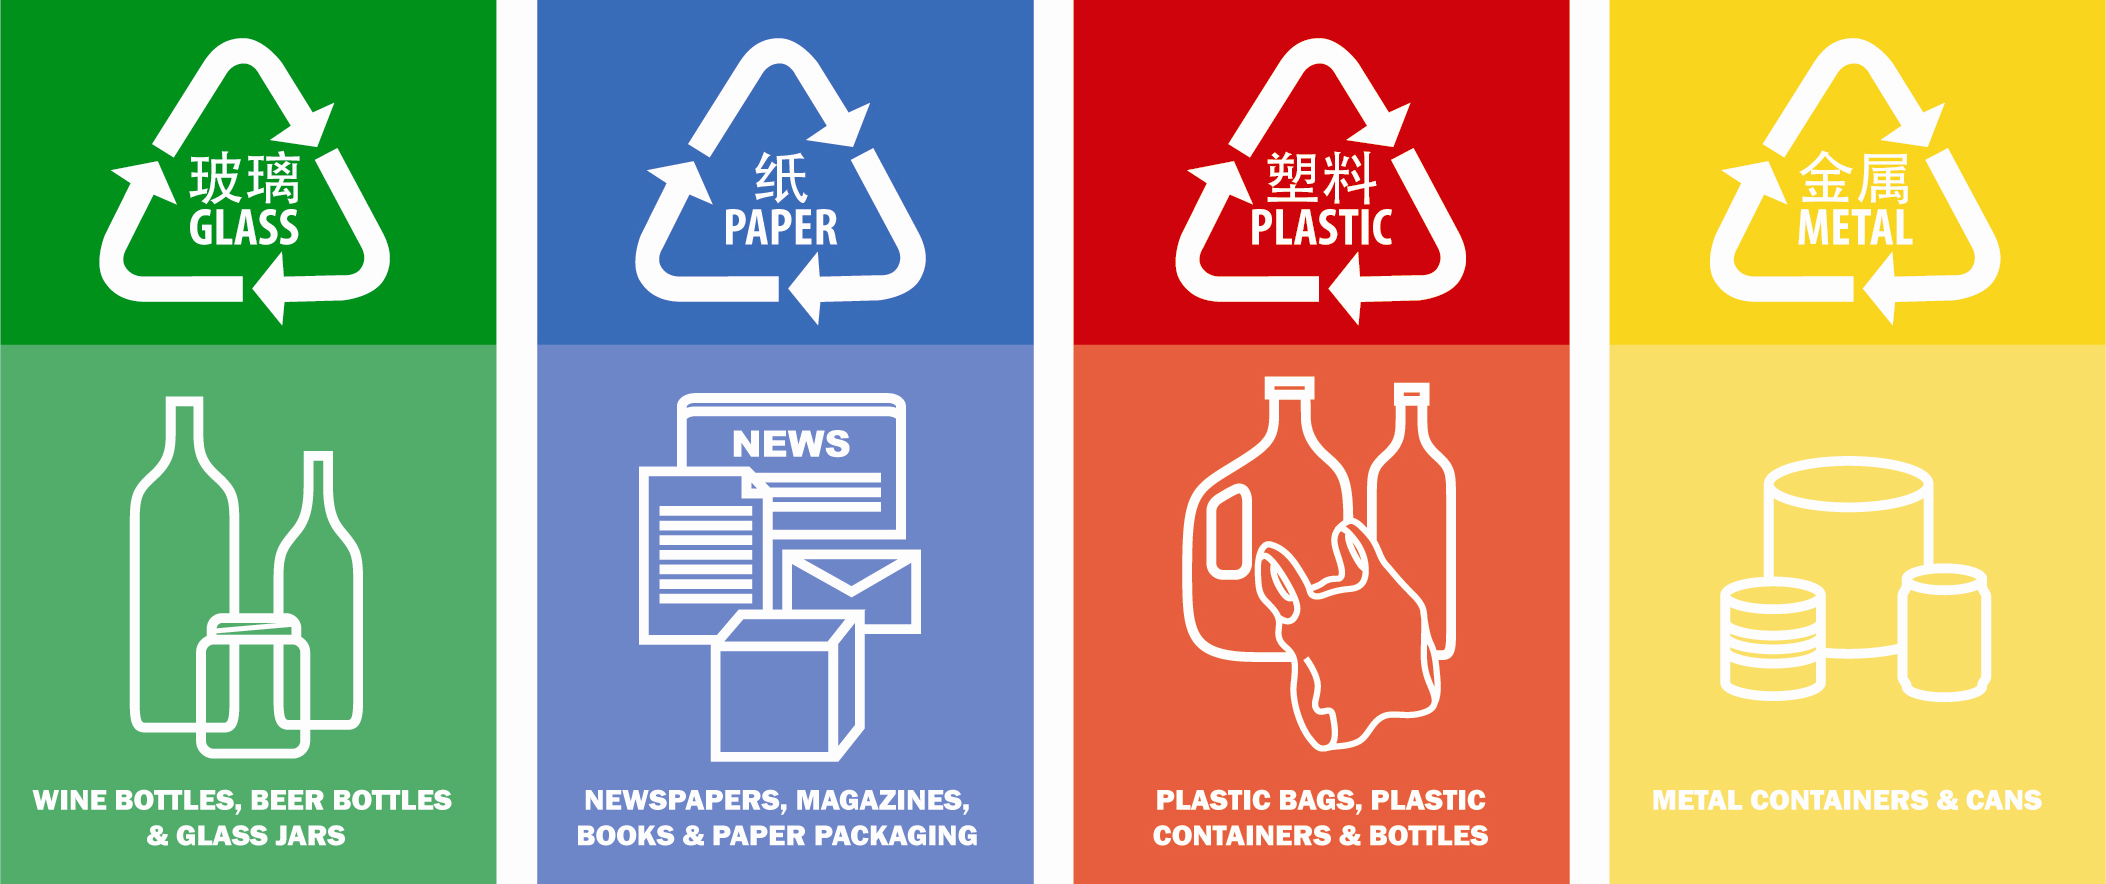 printable-recycling-logo